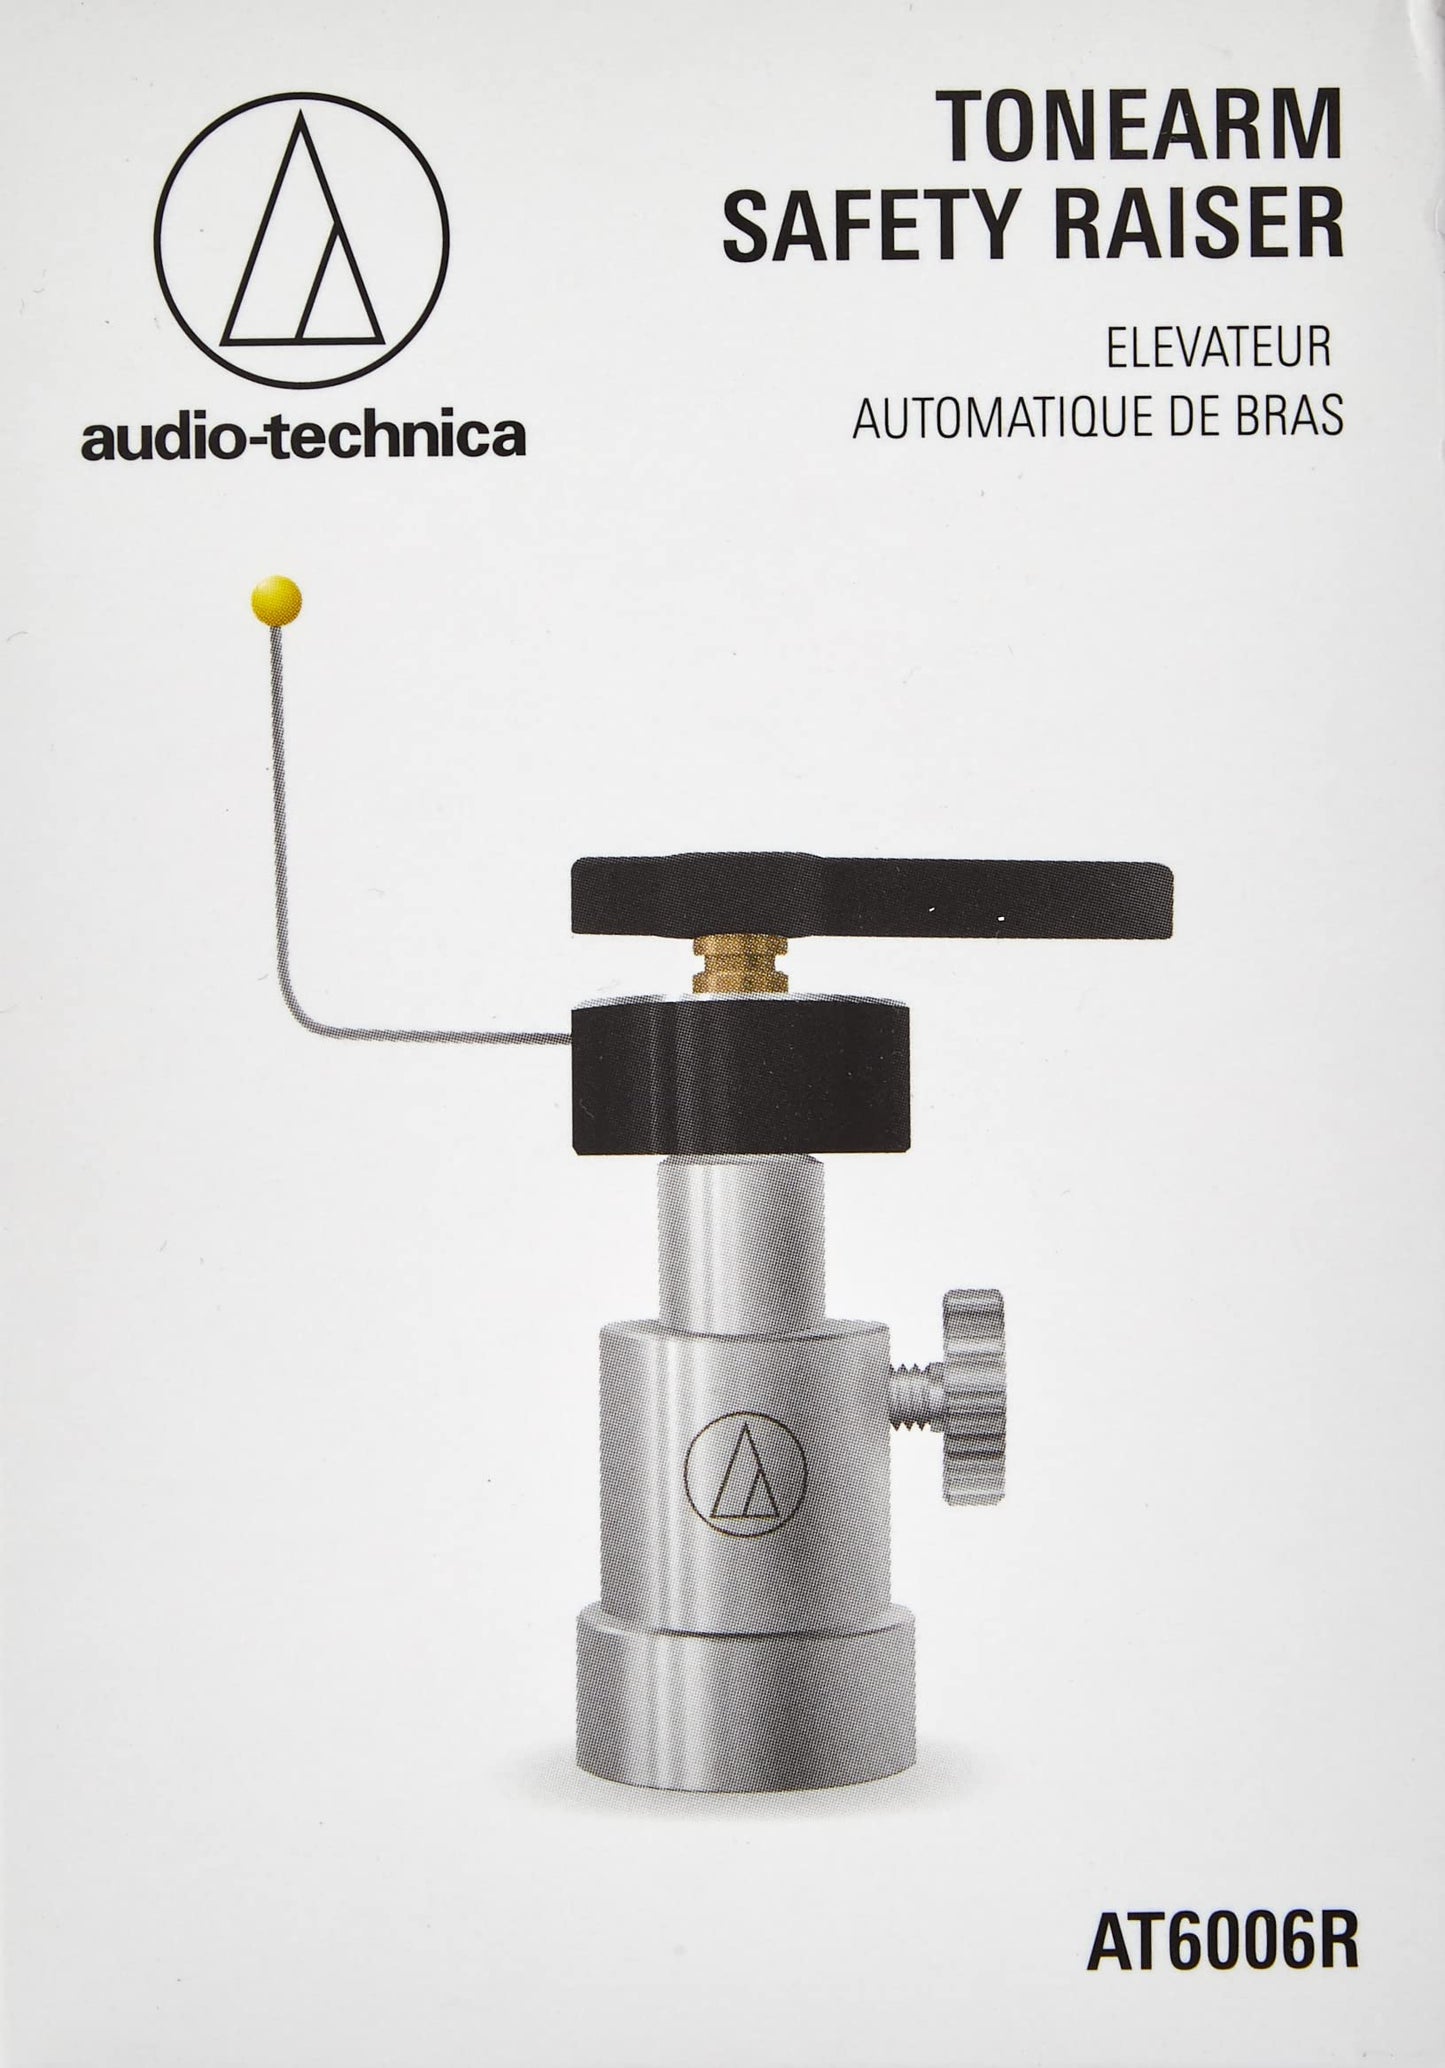 Audio-Technica AT6006R Safety Raiser